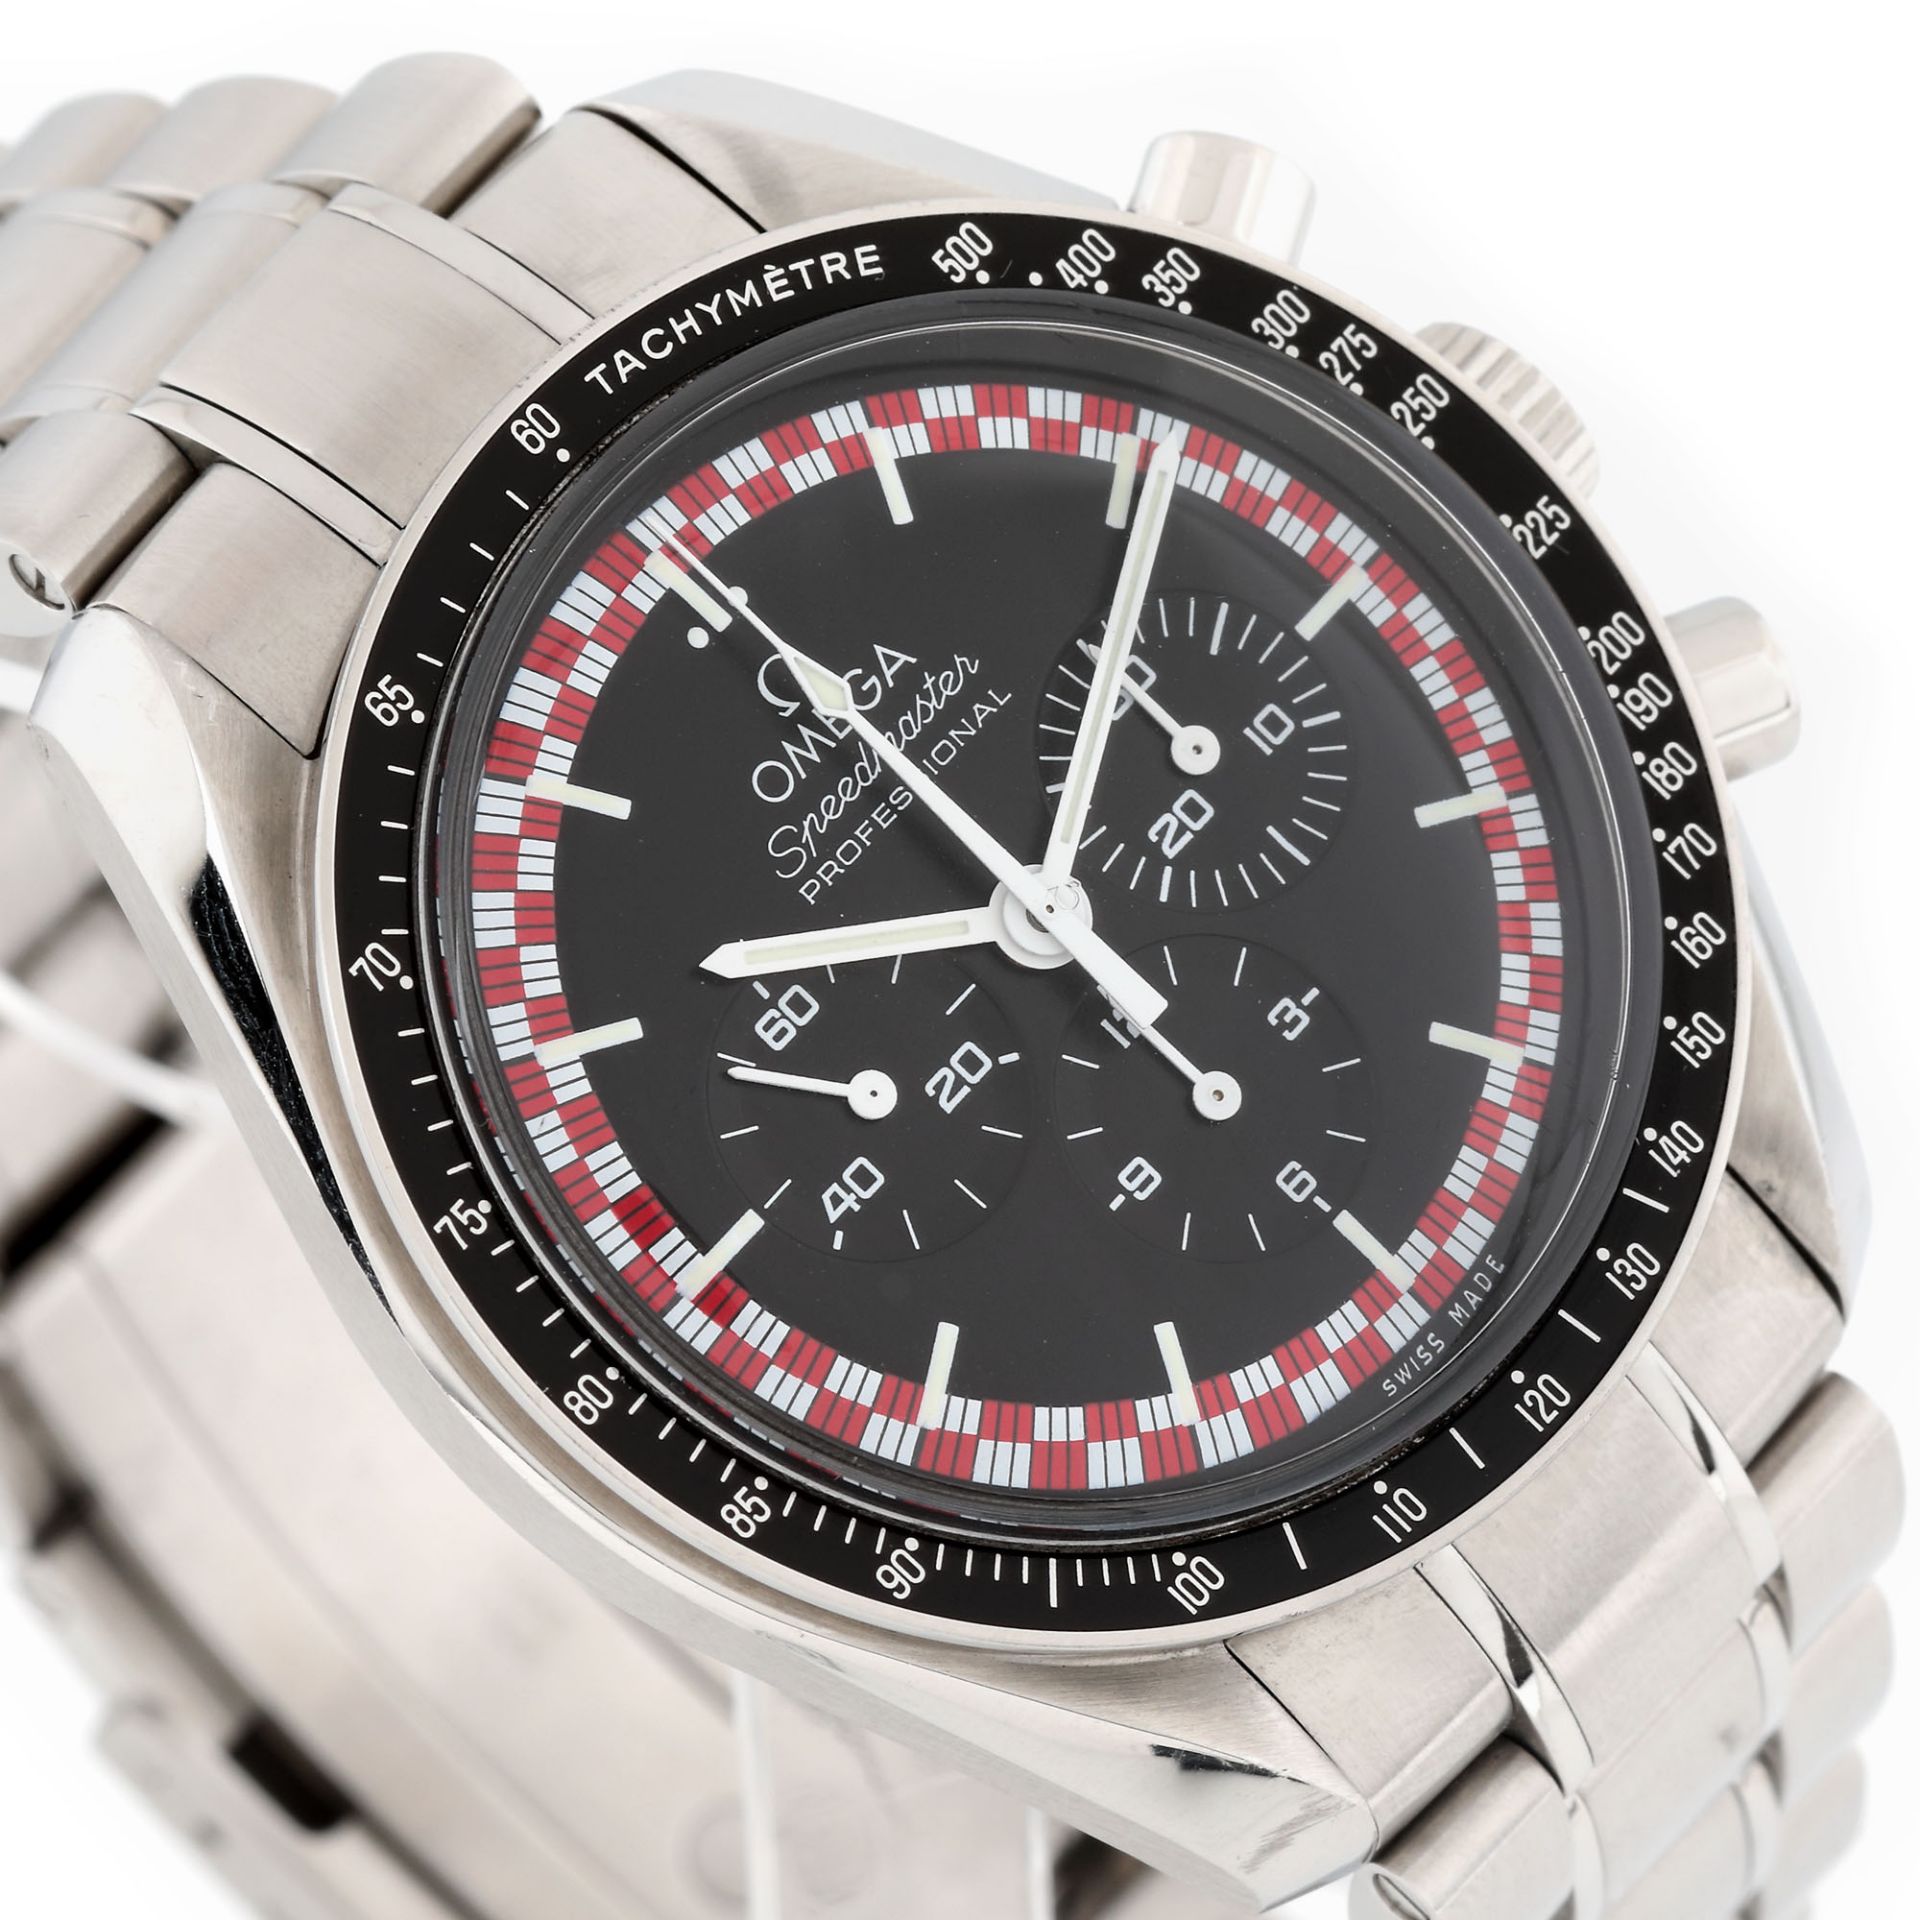 Omega Speedmaster Professional Moonwatch "TinTin" wristwatch, men, original box, collector's item - Image 4 of 4